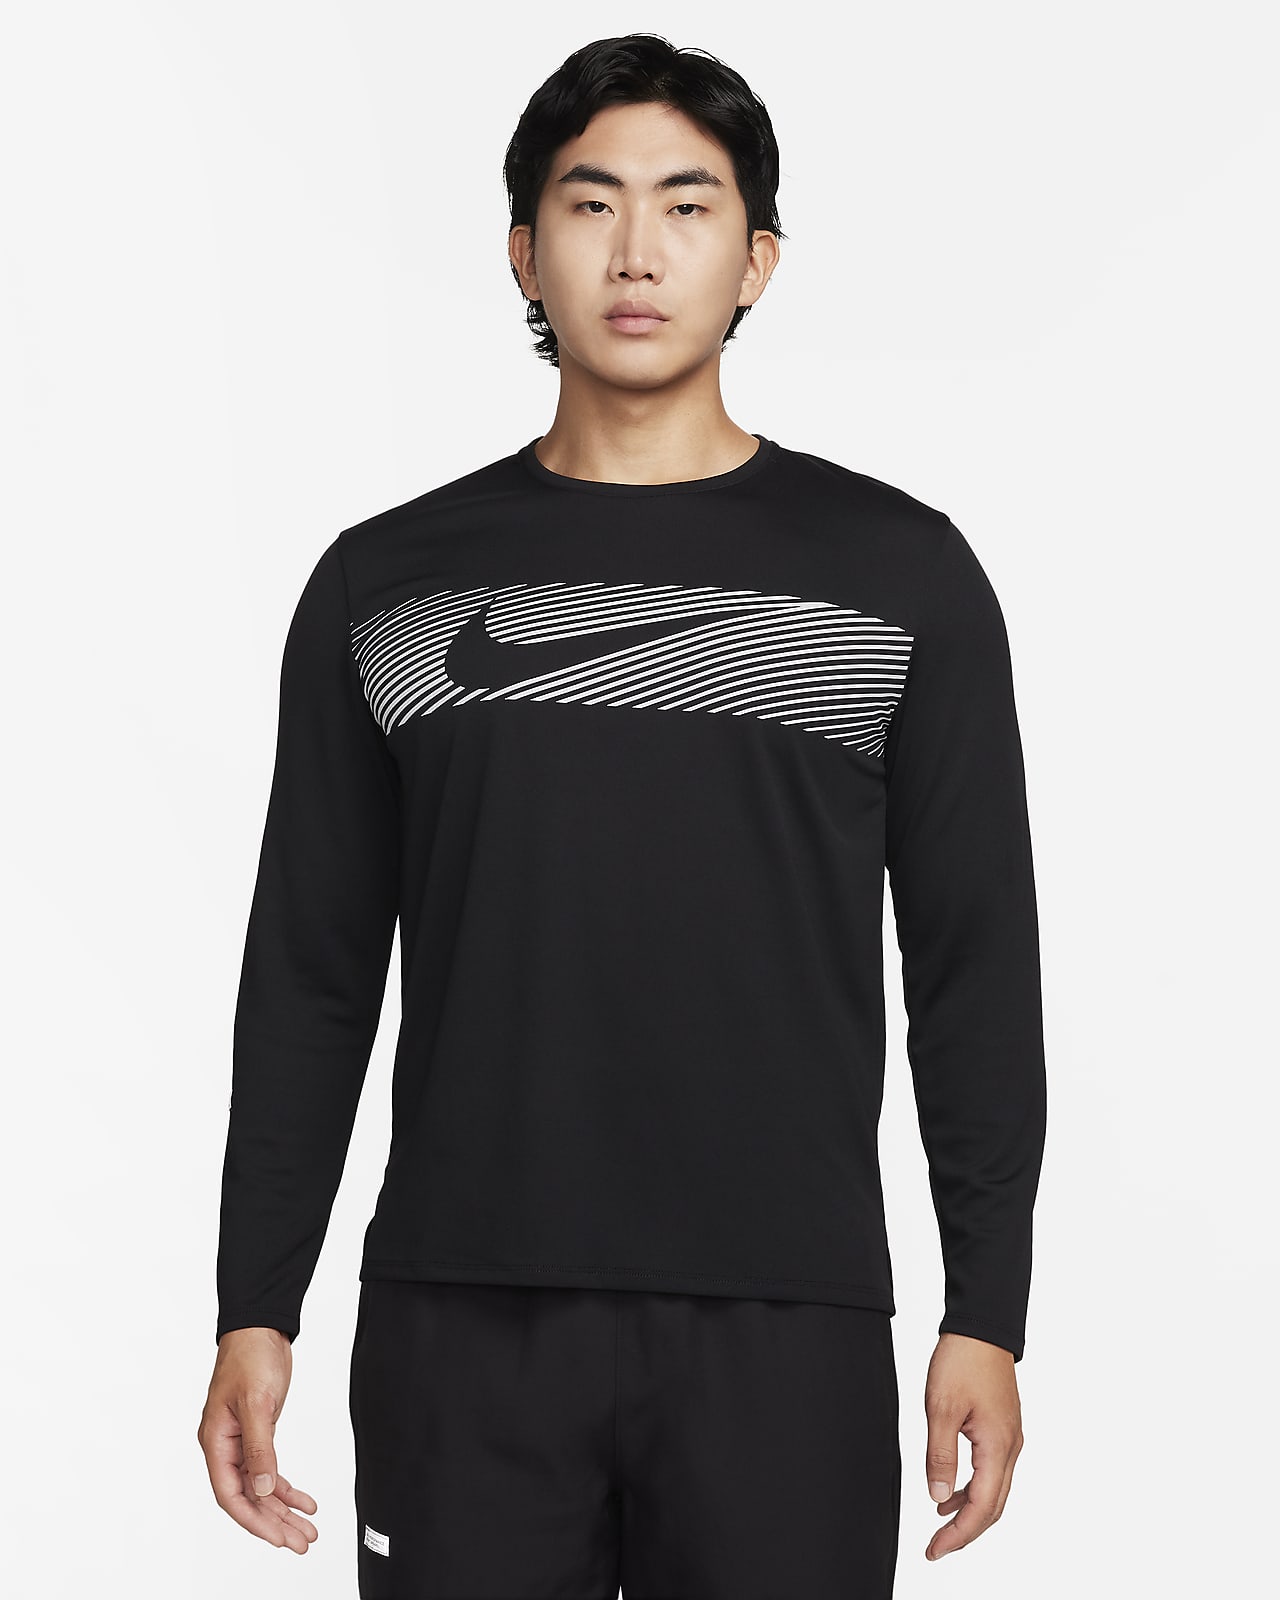 Buy Nike Men's Dri-FIT Yoga Training T-Shirt Black in KSA -SSS